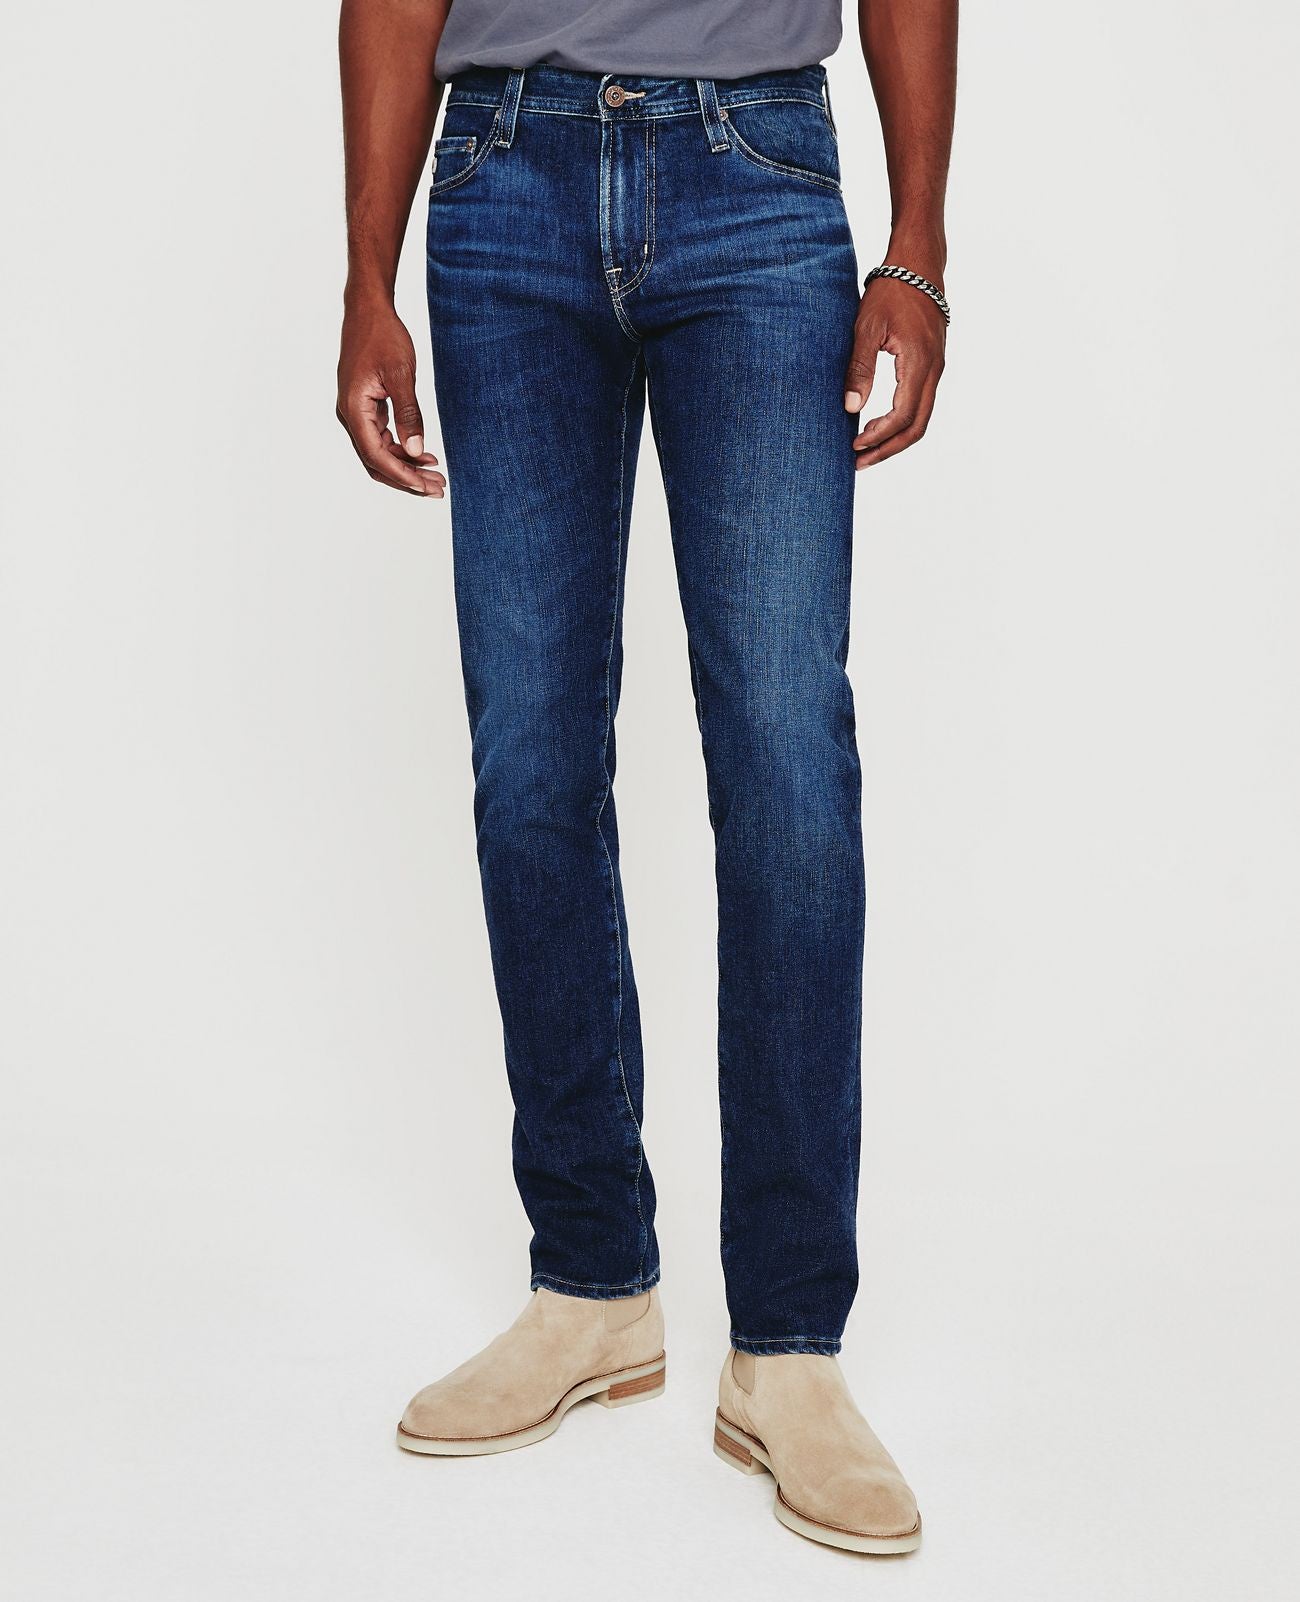 AG Men's Tellis Slim Fit Jeans - Midlands